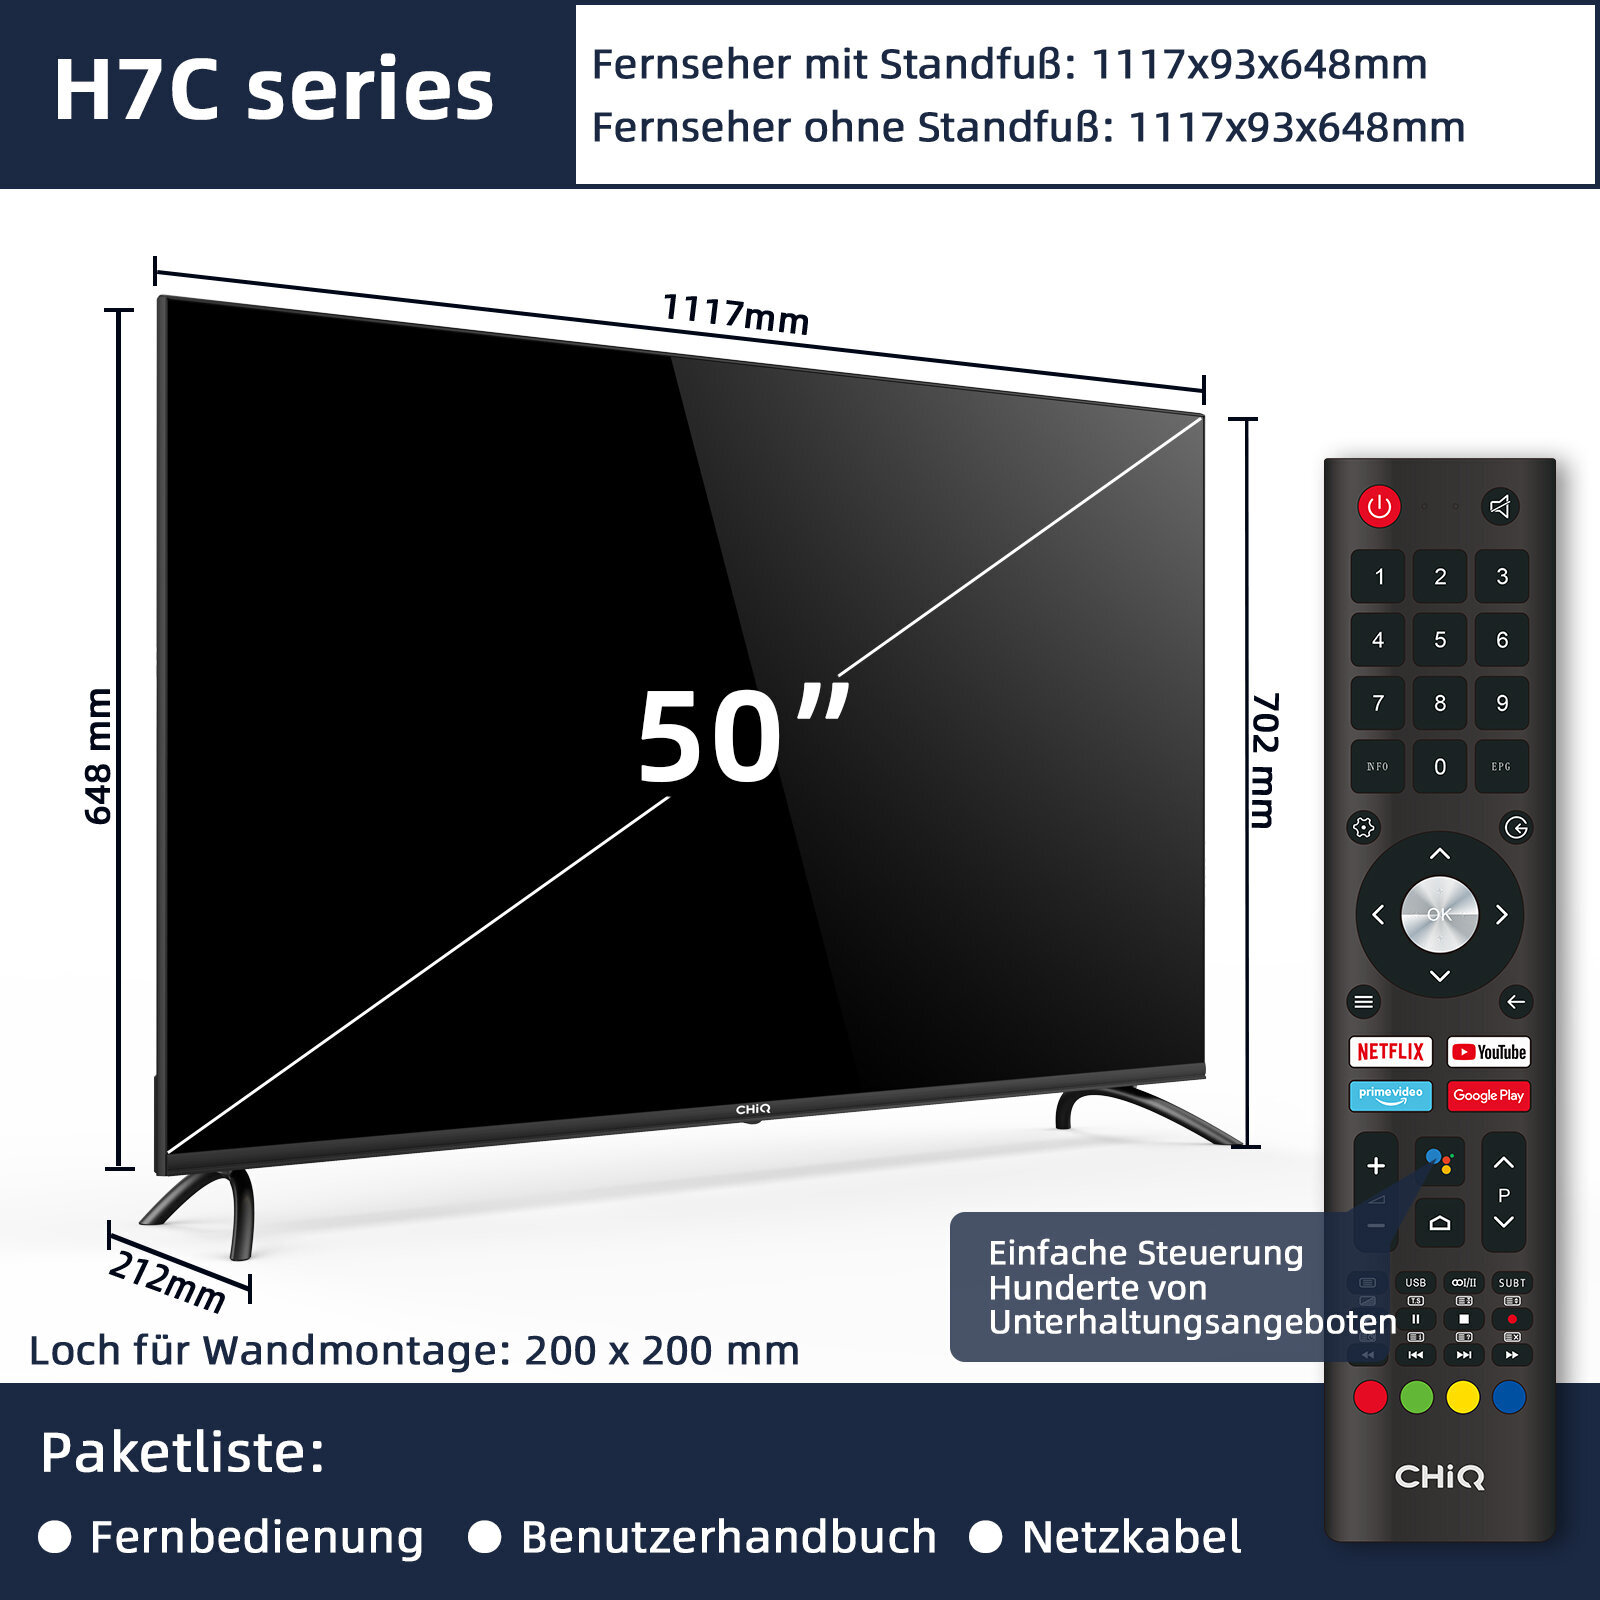 4K, / TV, 127 CHIQ QLED 50 cm, QLED Google TV) TV Zoll SMART U50QM8G (Flat,